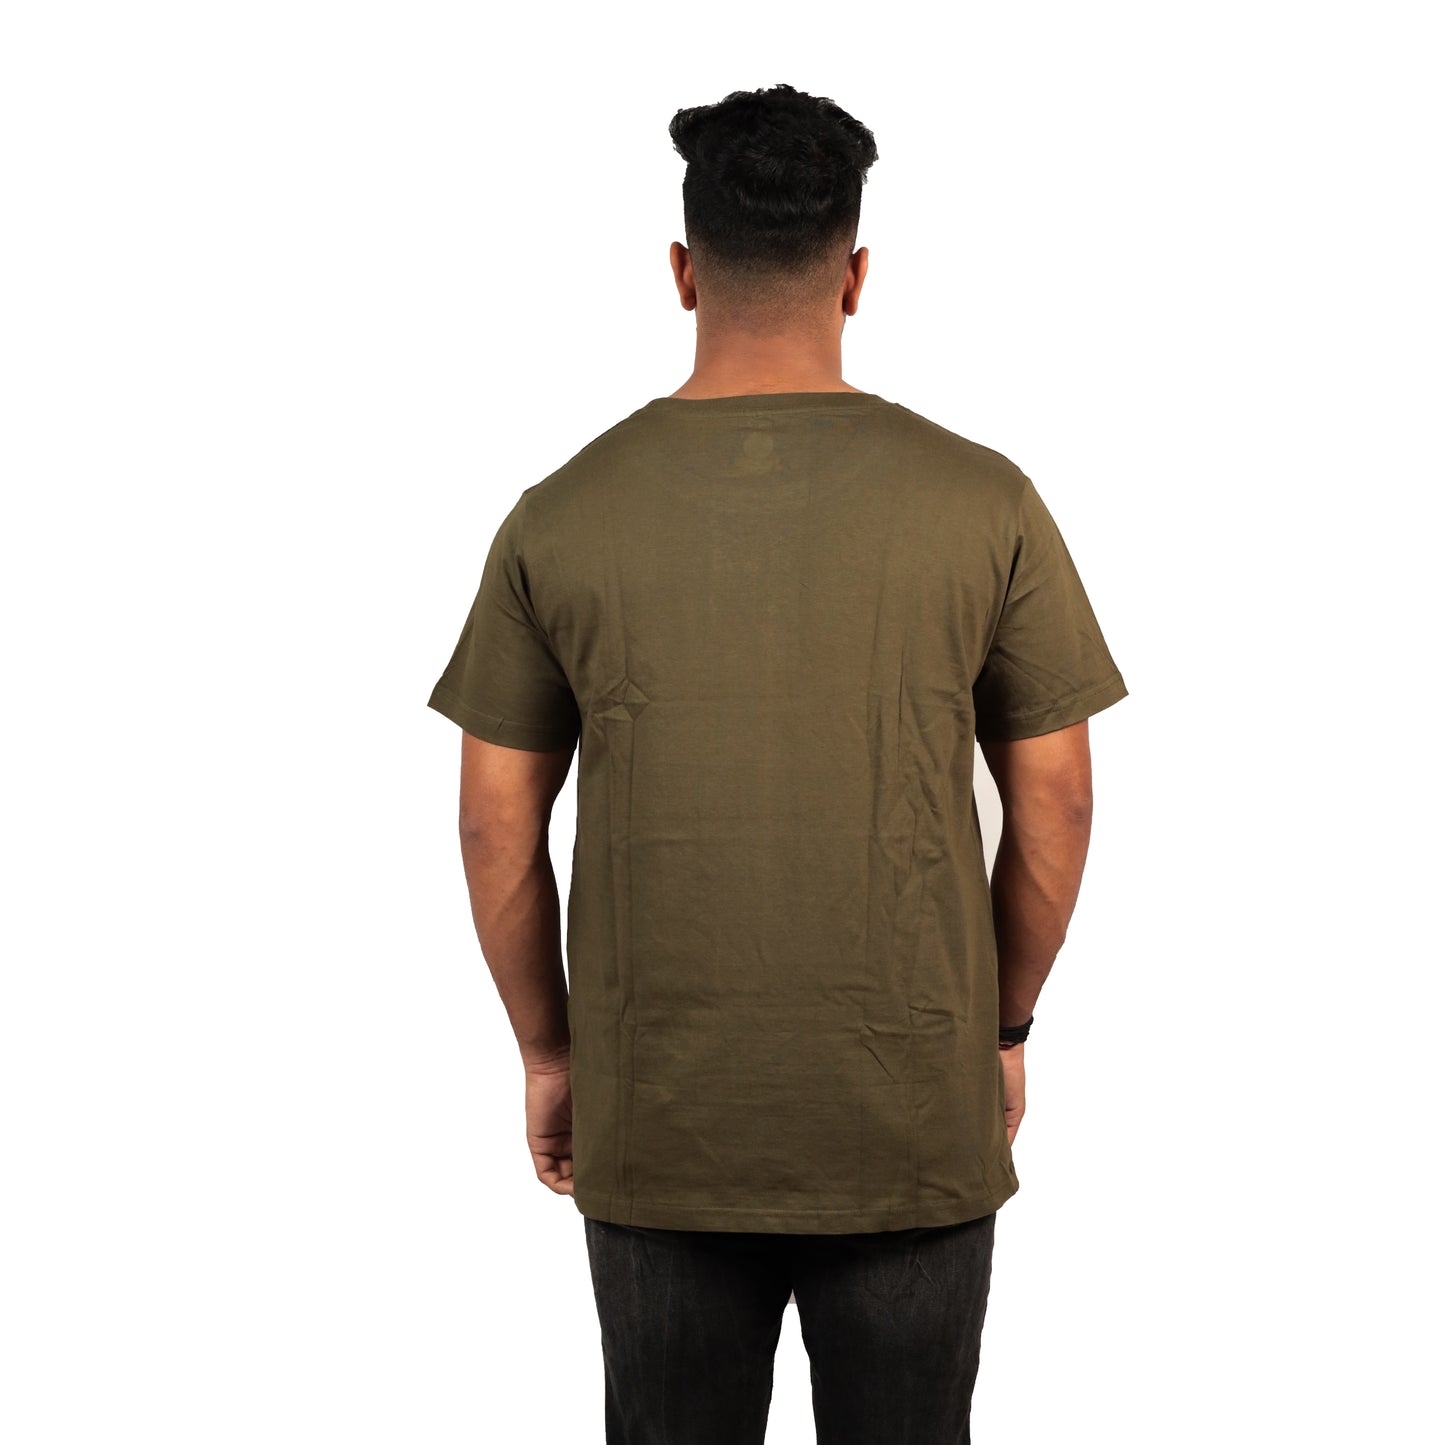 Viking T-shirt In Olive Green Color For Men